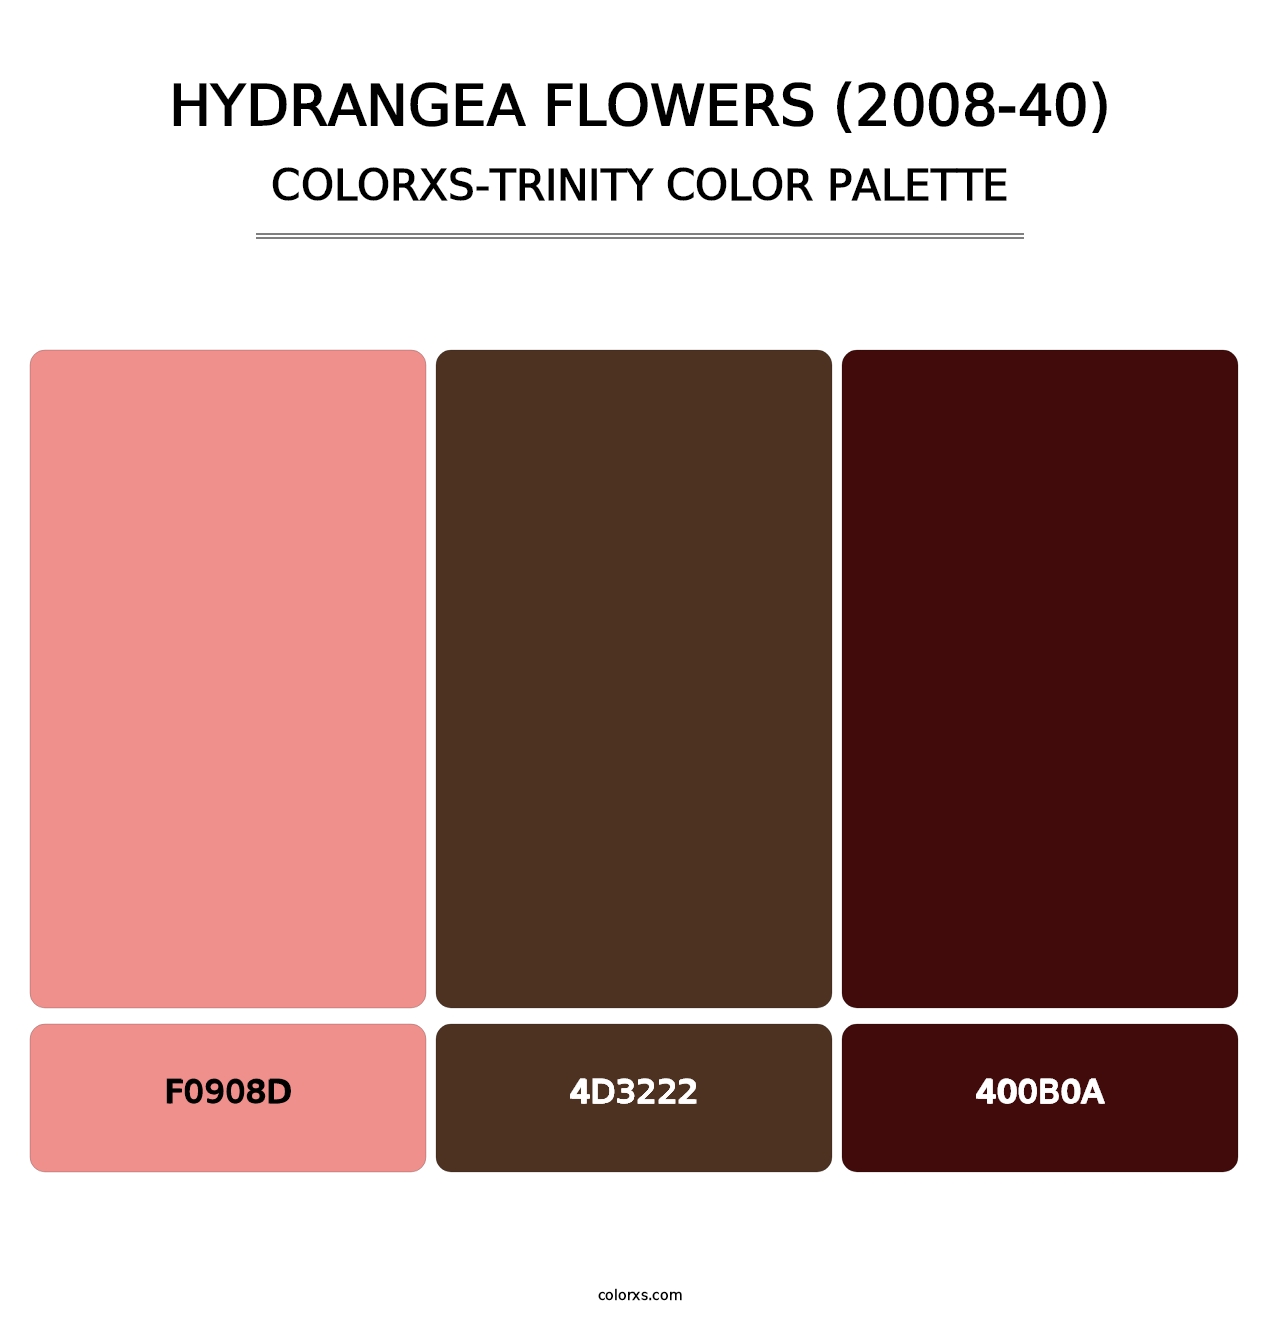 Hydrangea Flowers (2008-40) - Colorxs Trinity Palette